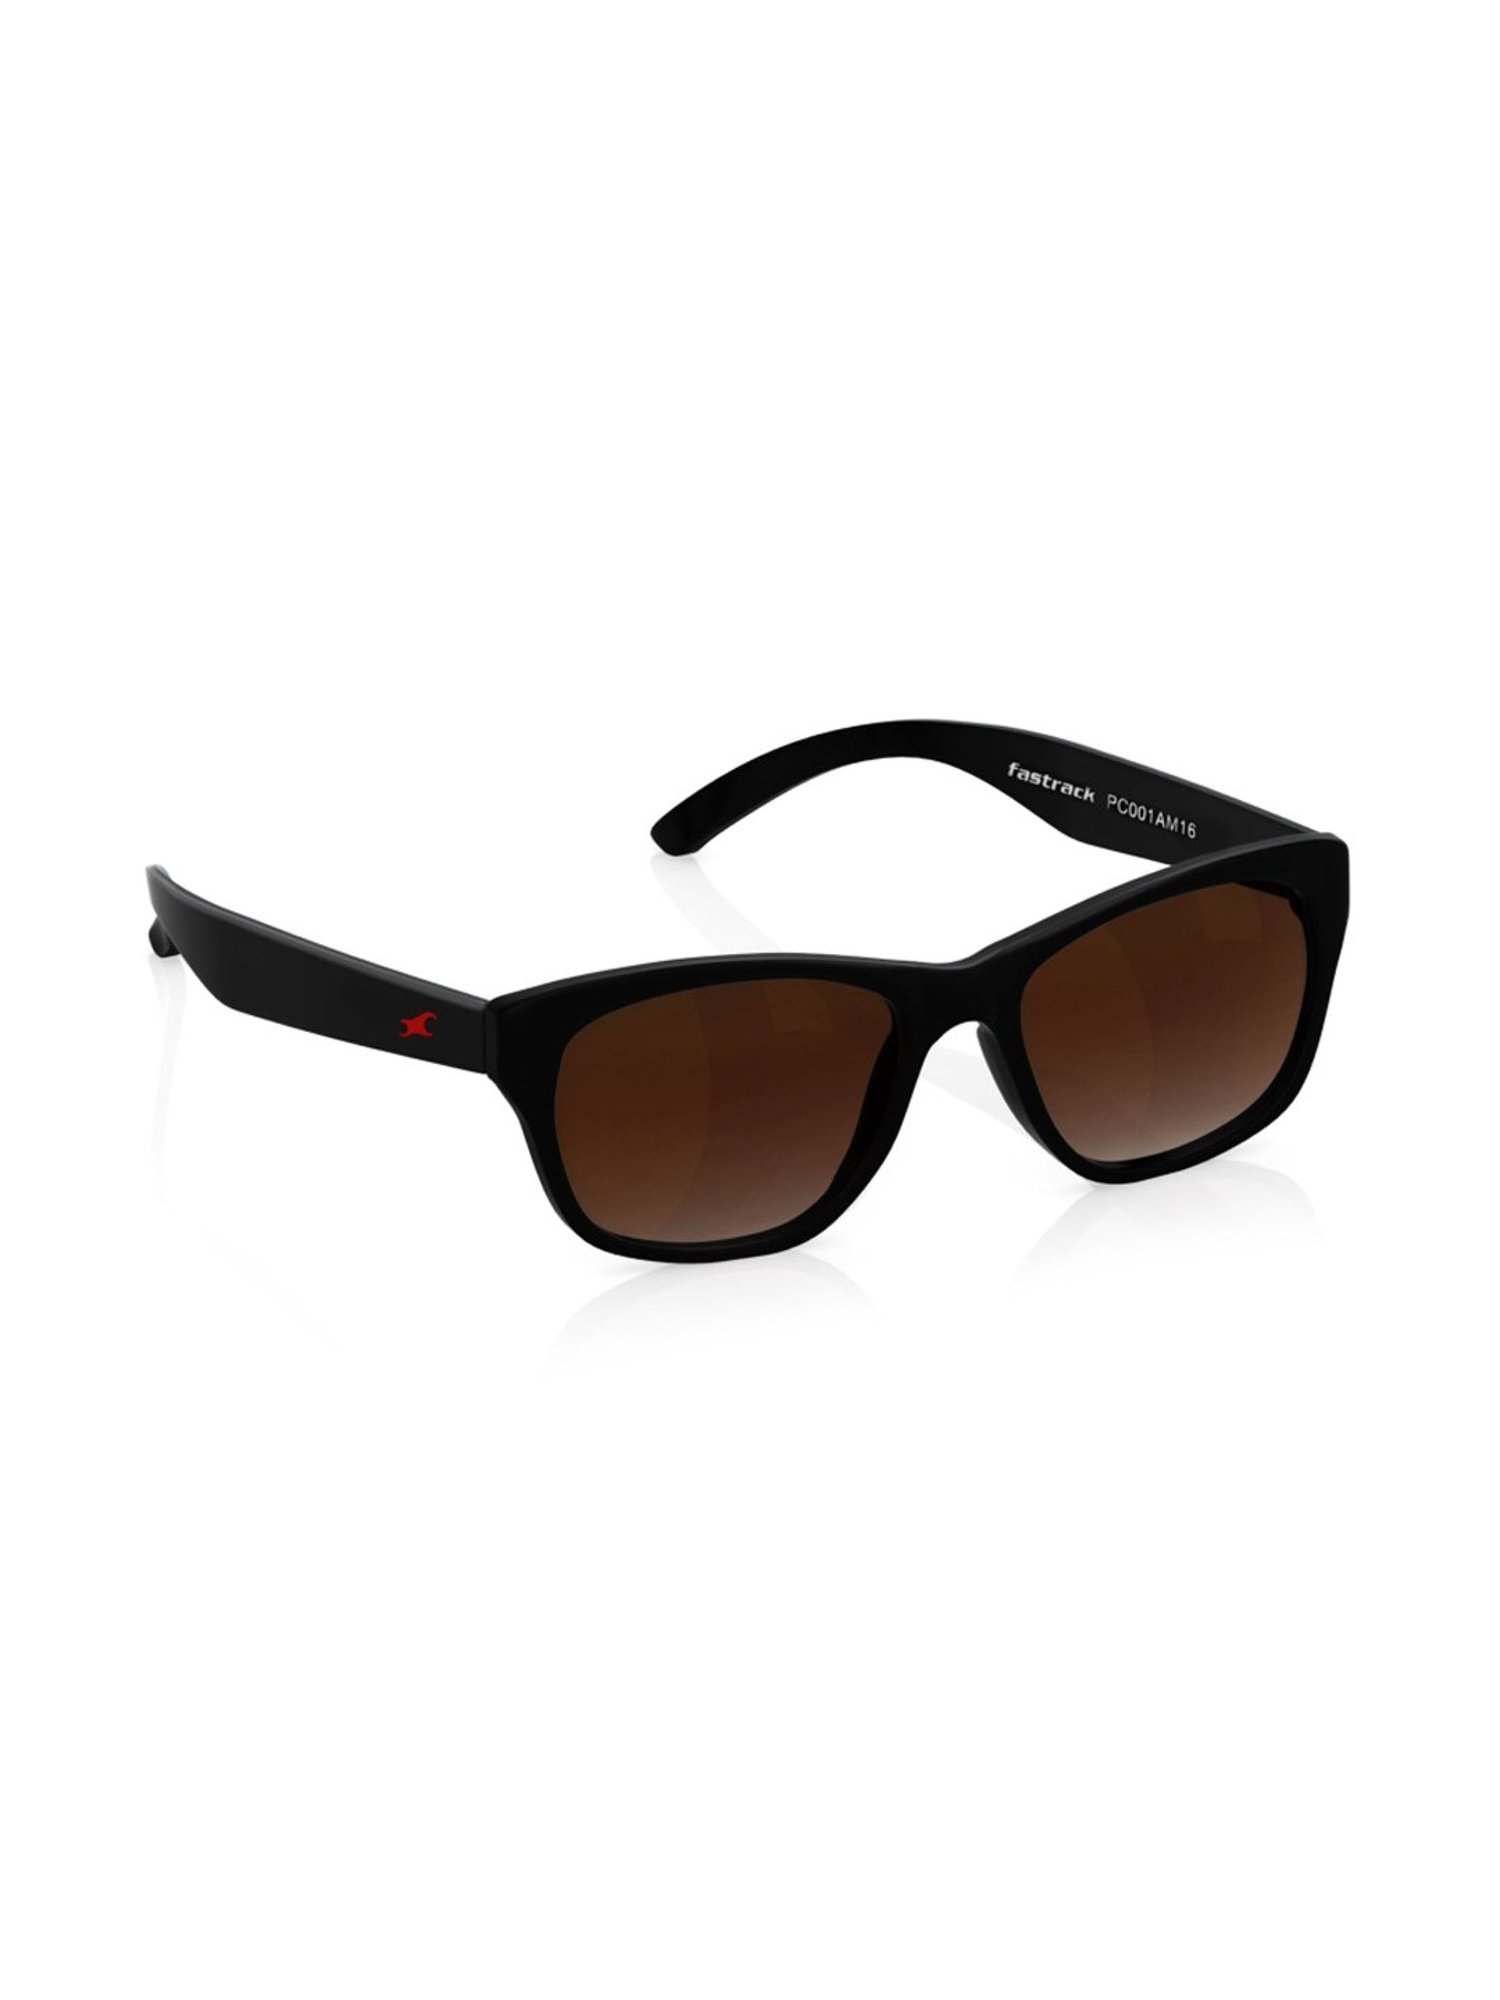 Fastrack Brown Gradient Wayfarer Sunglasses S15B3061 @ ₹1840